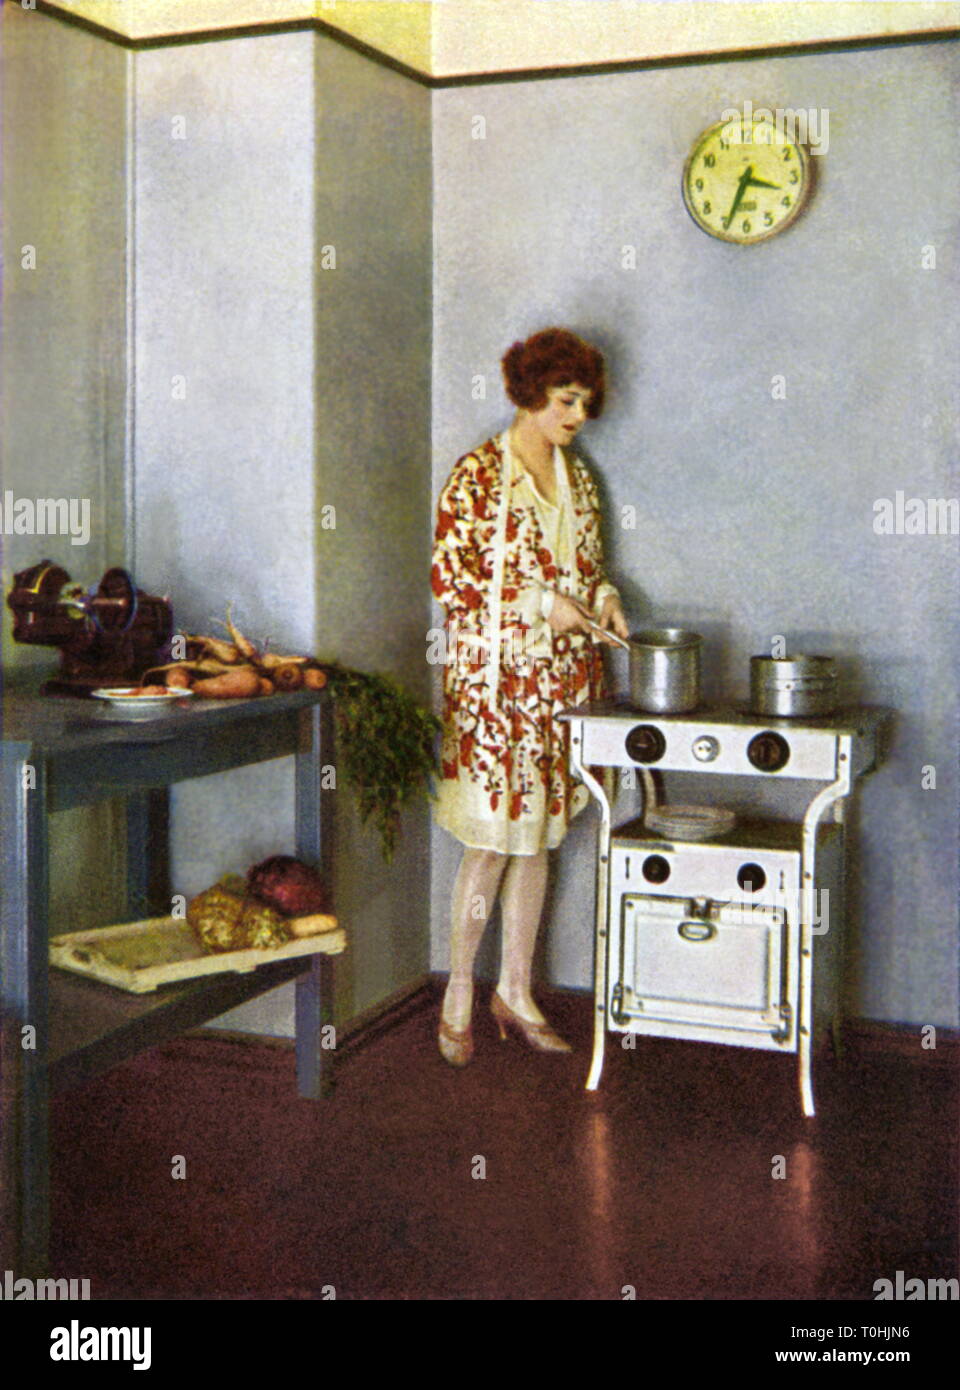 Hogar, cocina, título: "Hanni Weisse am AEG Kochherd', la publicidad postal, Alemania, circa 1929, Additional-Rights-Clearance-Info-Not-Available Foto de stock